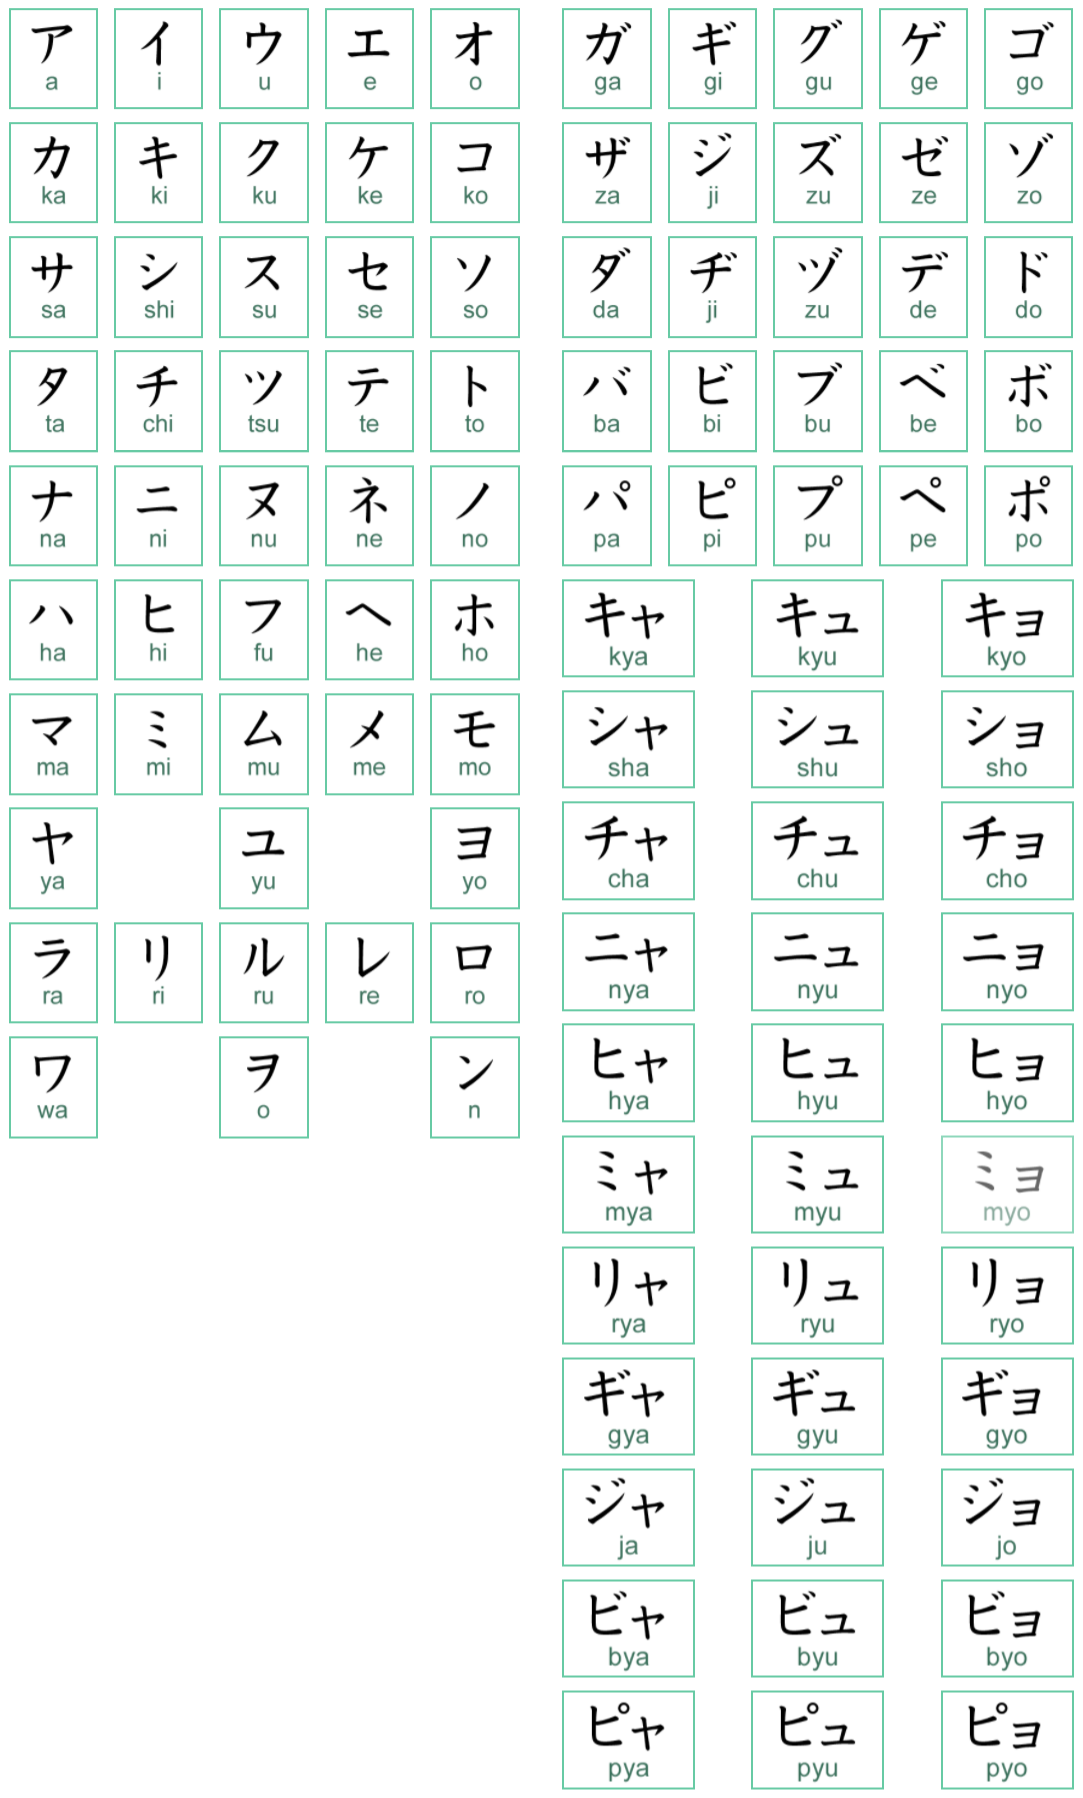 Bảng chữ cái katakana